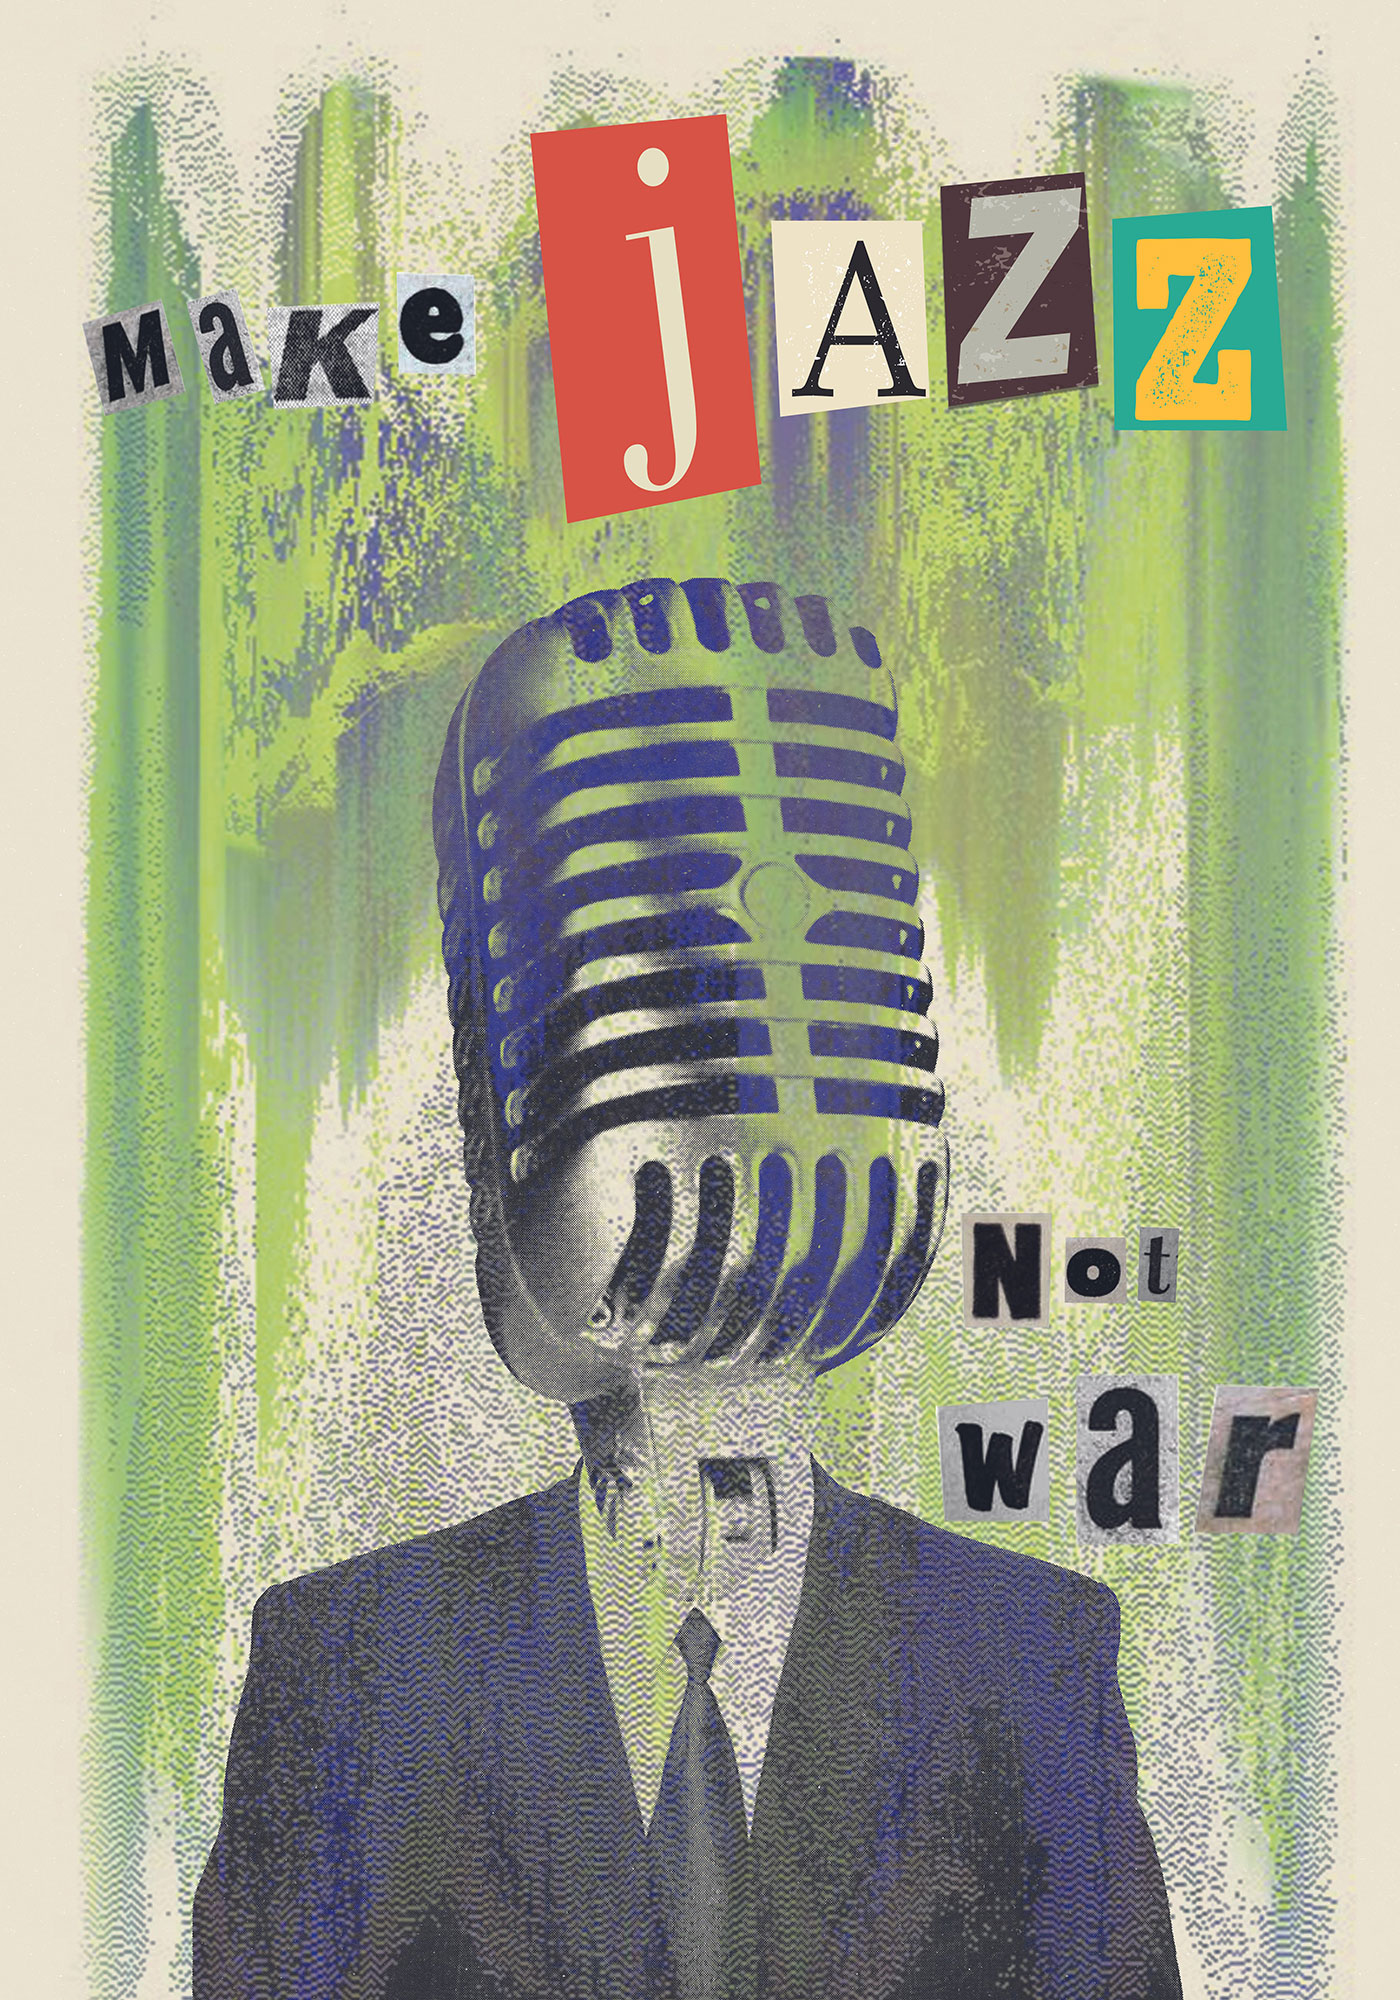 Okujava_Ana_georgia_okujava_ana_make-jazz-not-war.tif